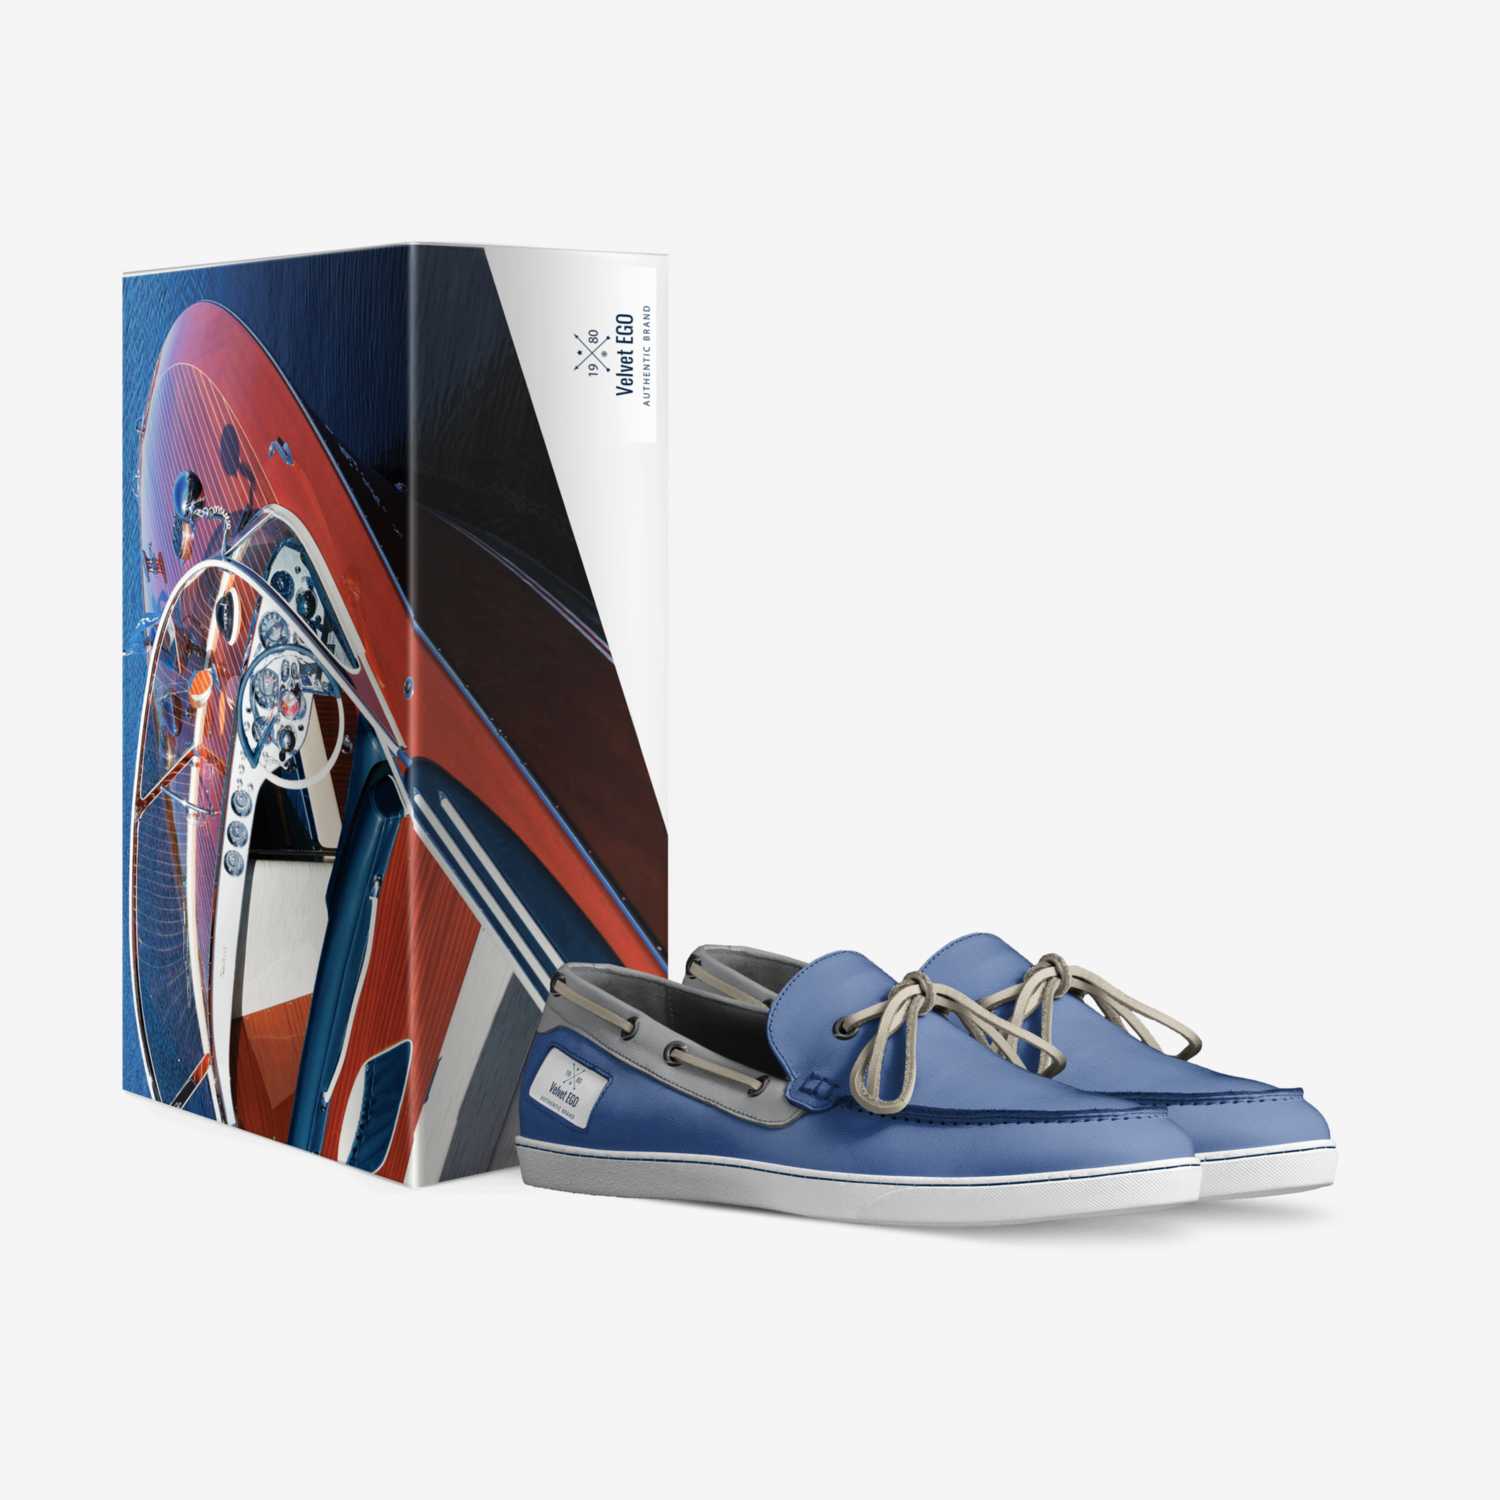 Velvet EGO custom made in Italy shoes by Shantae Esannason | Box view